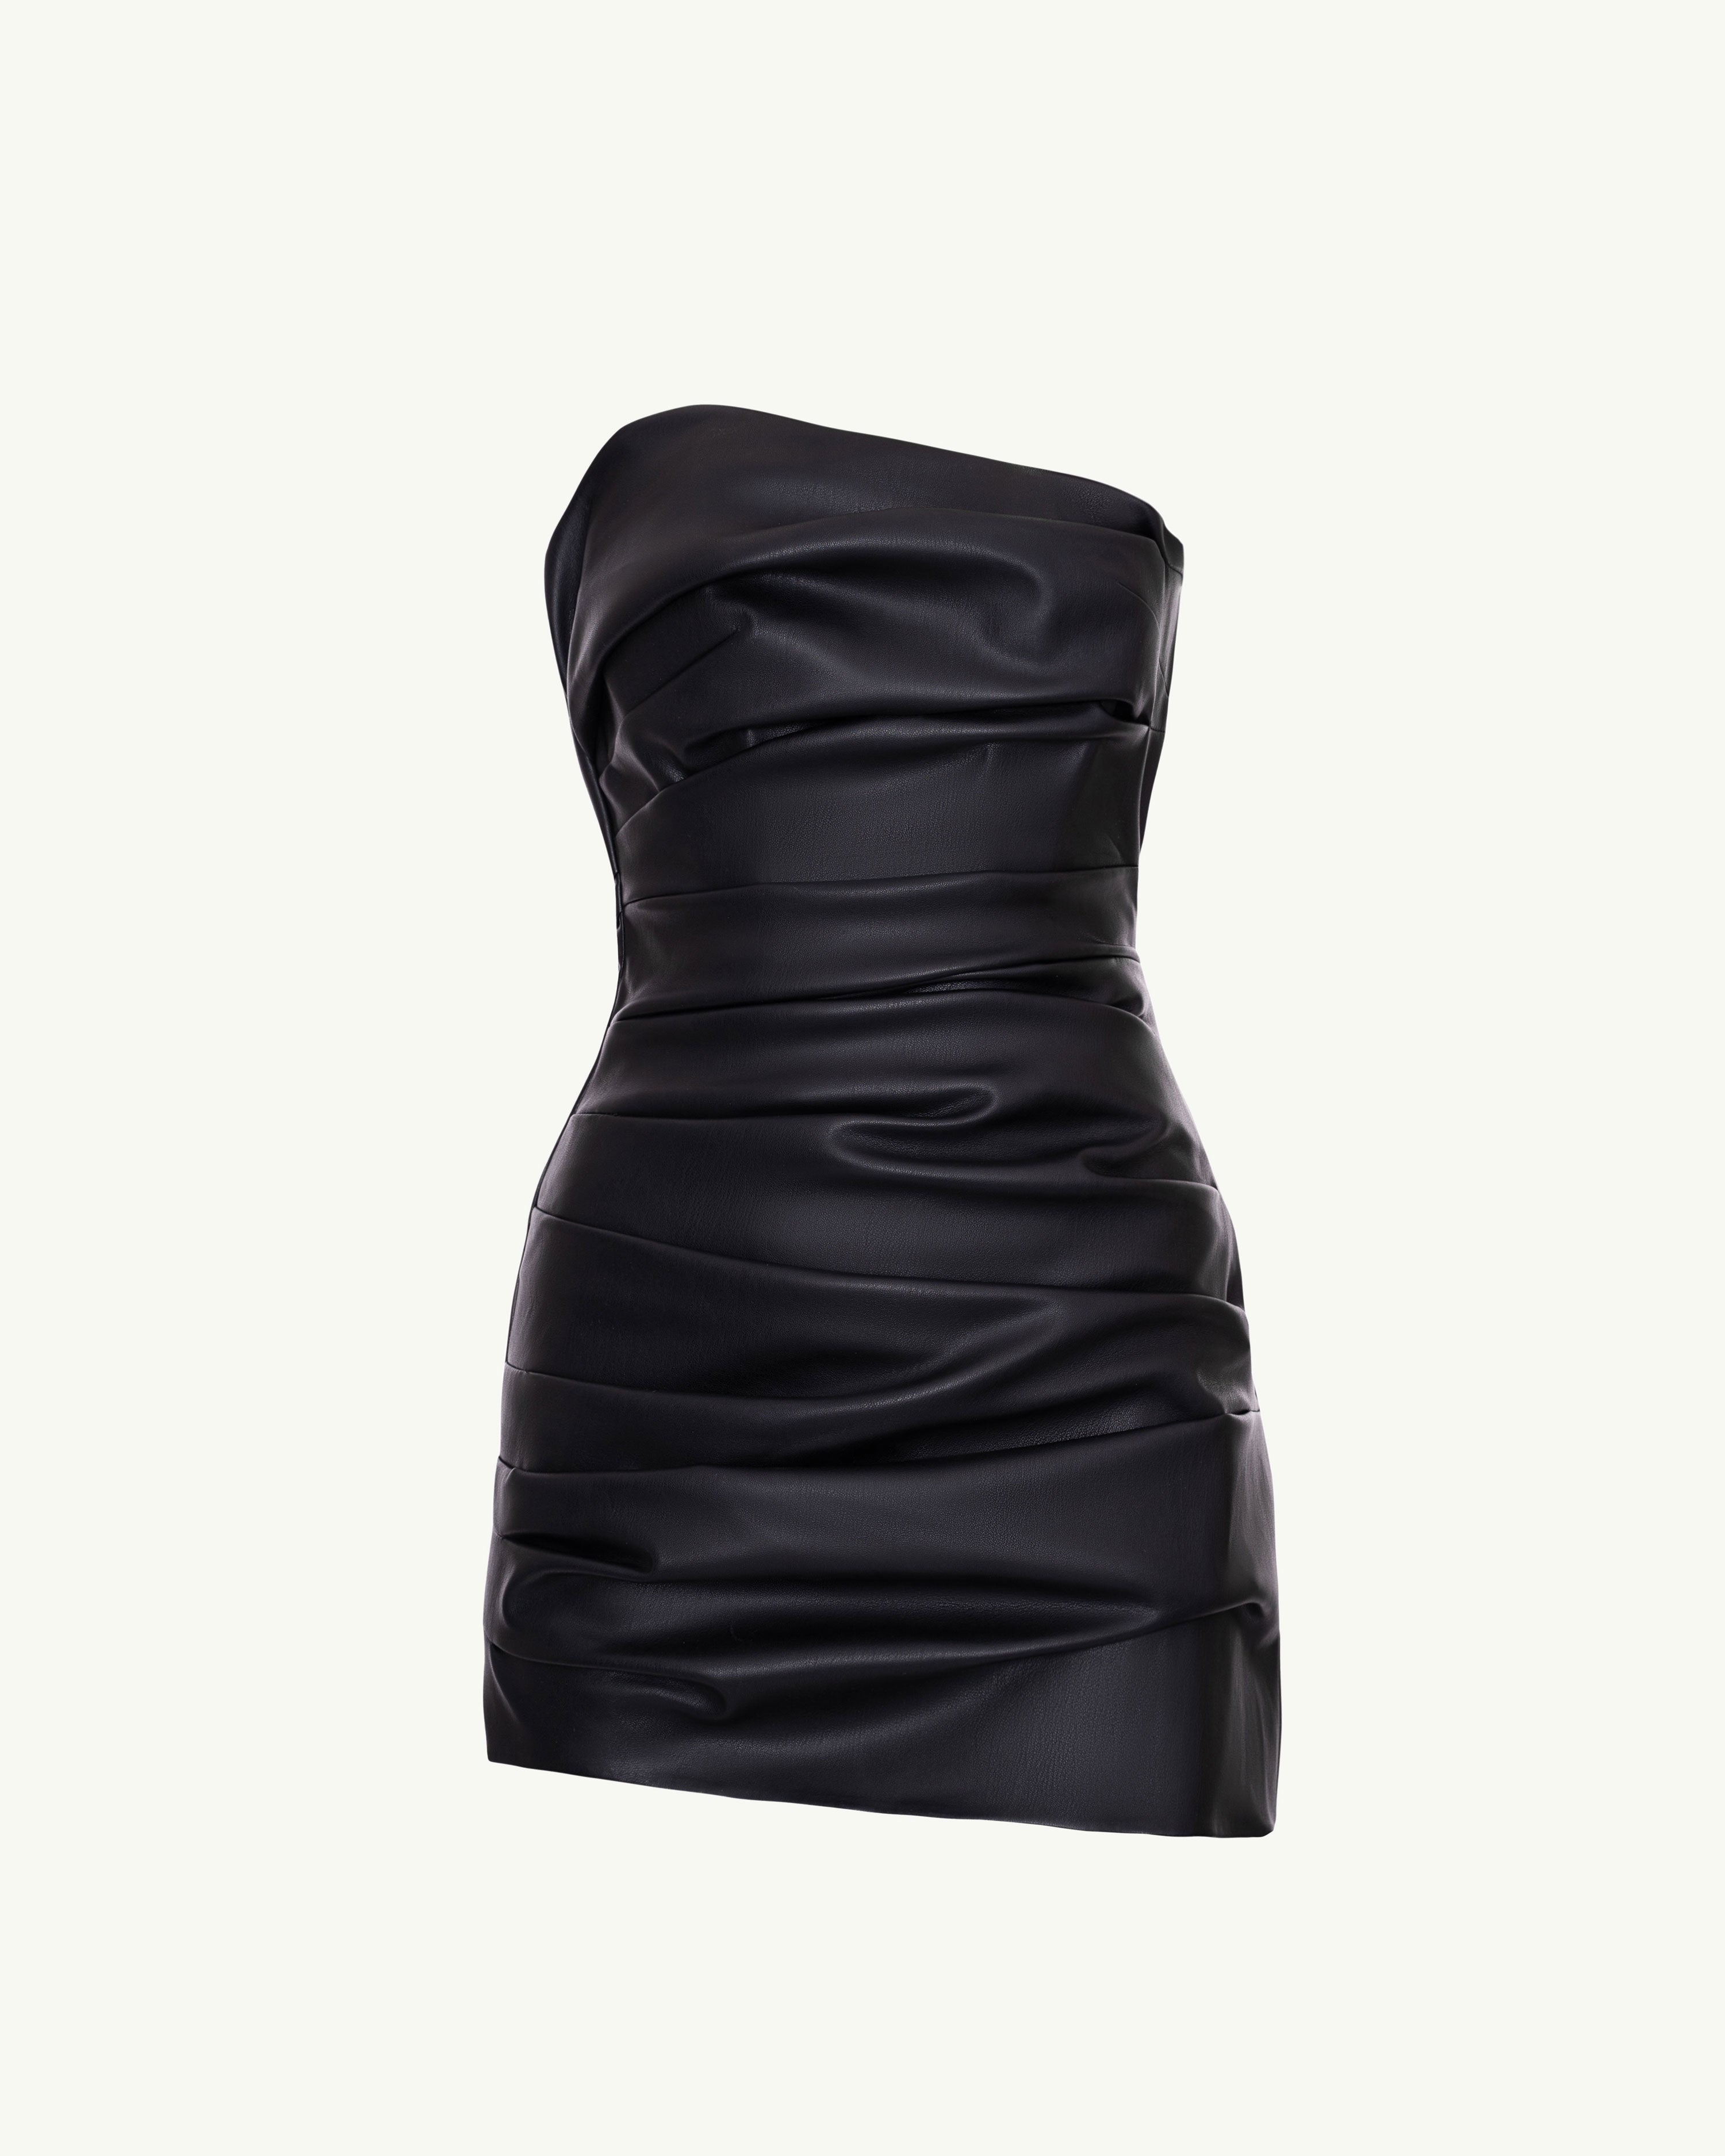 Product photo of a black vegan leather draped mini dress with asymmetric hem featuring shorts underneath